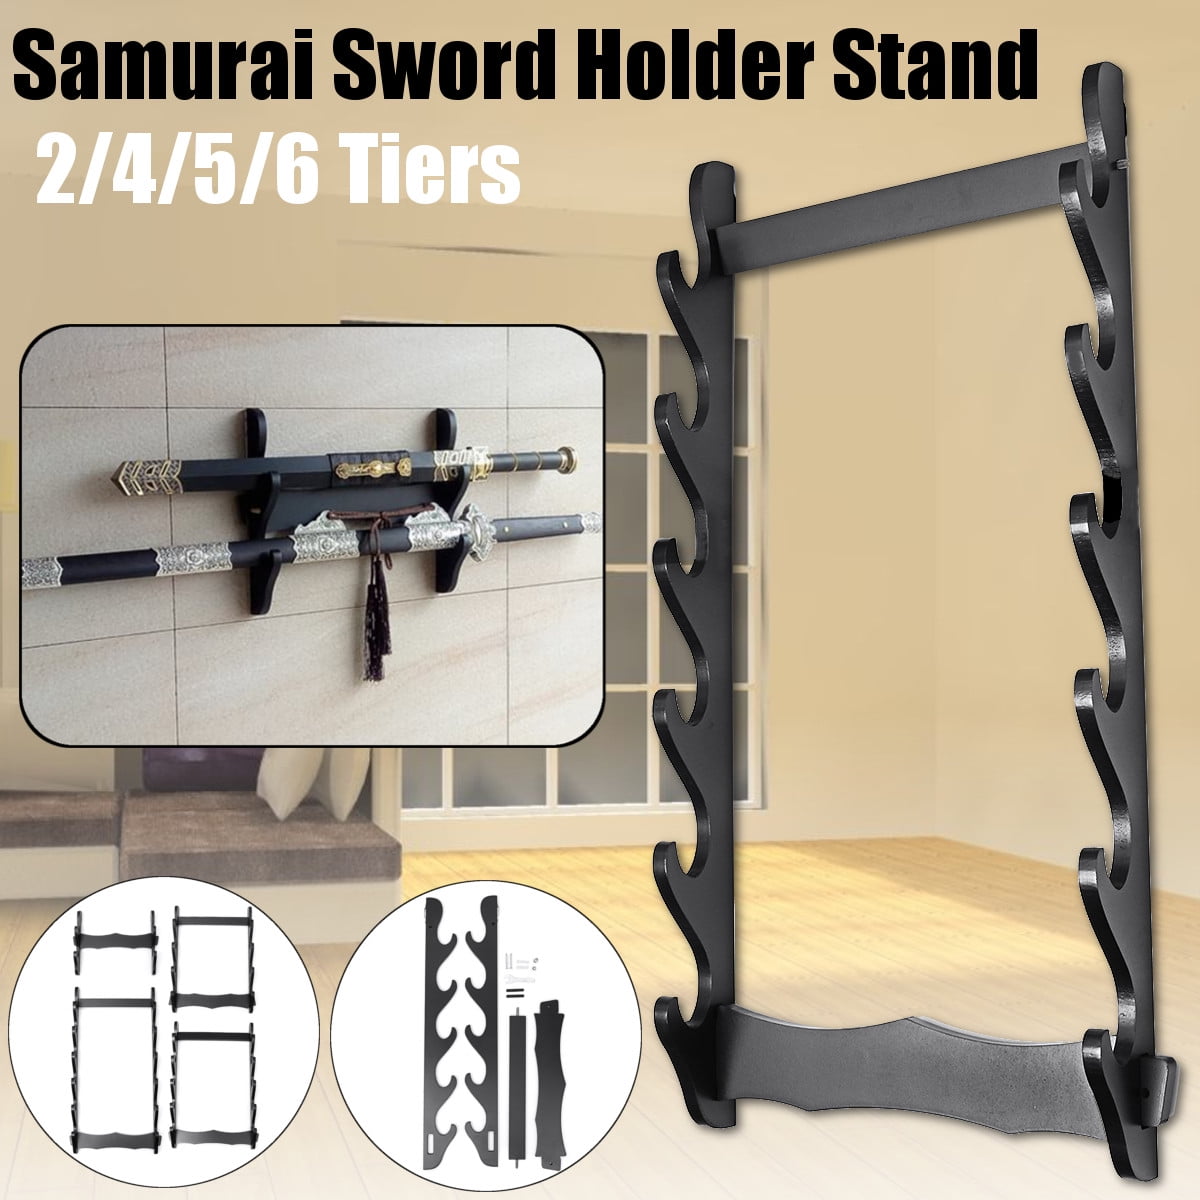 2-6 Tier Sword Holder Wall Mount Samurai Stand Display Katana Wall Hanger Rack 